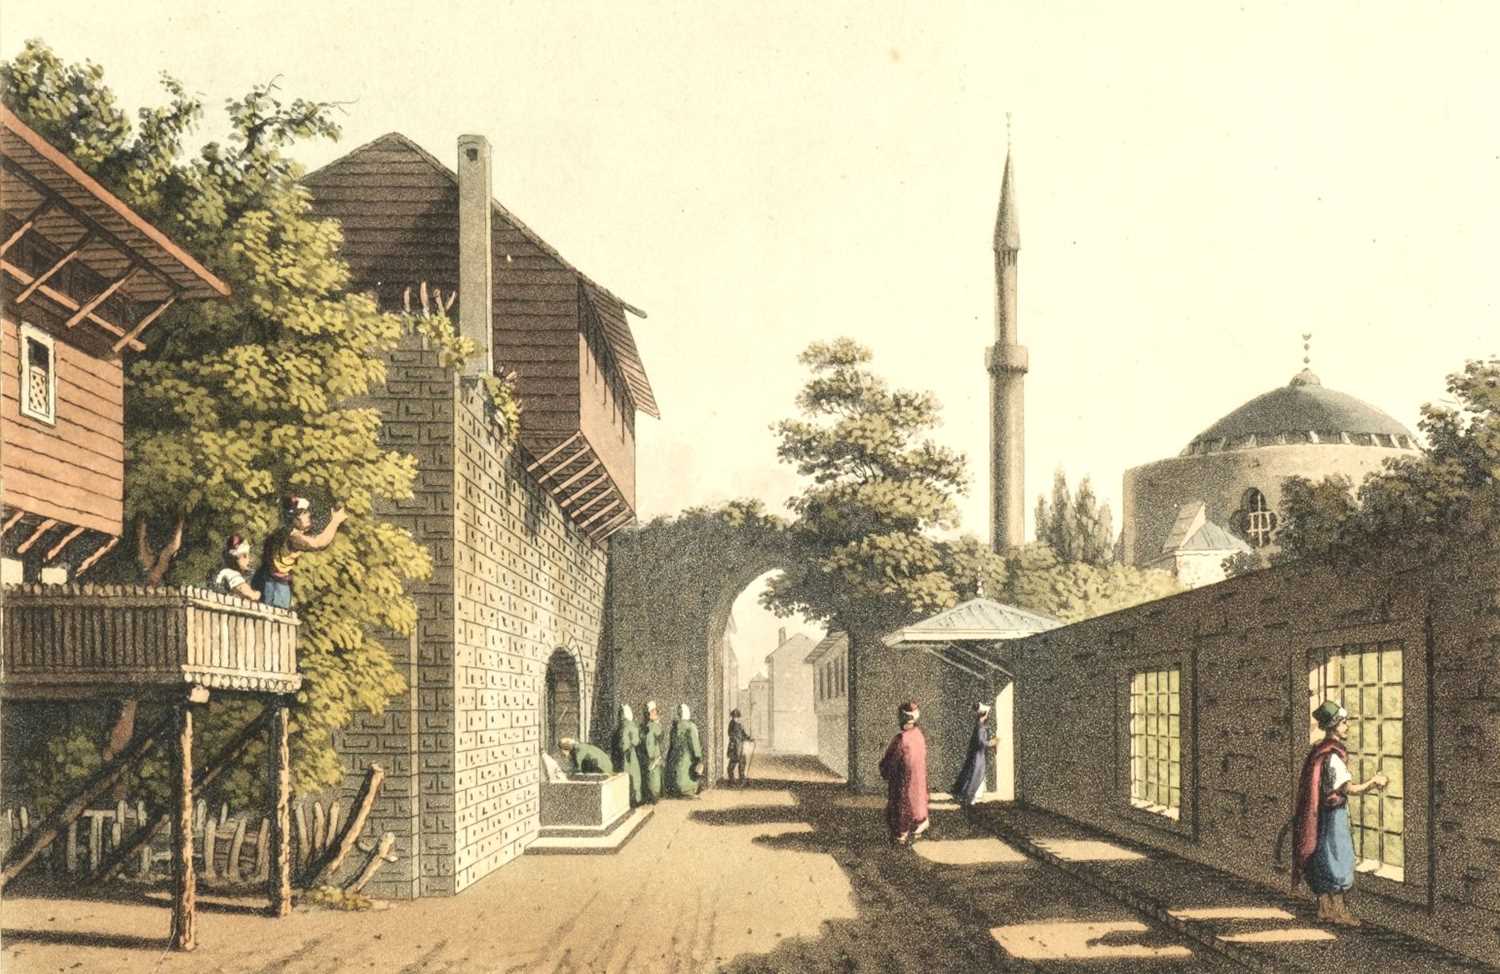 Lot 24 - Mayer (Luigi). Interesting Views in Turkey, 1819